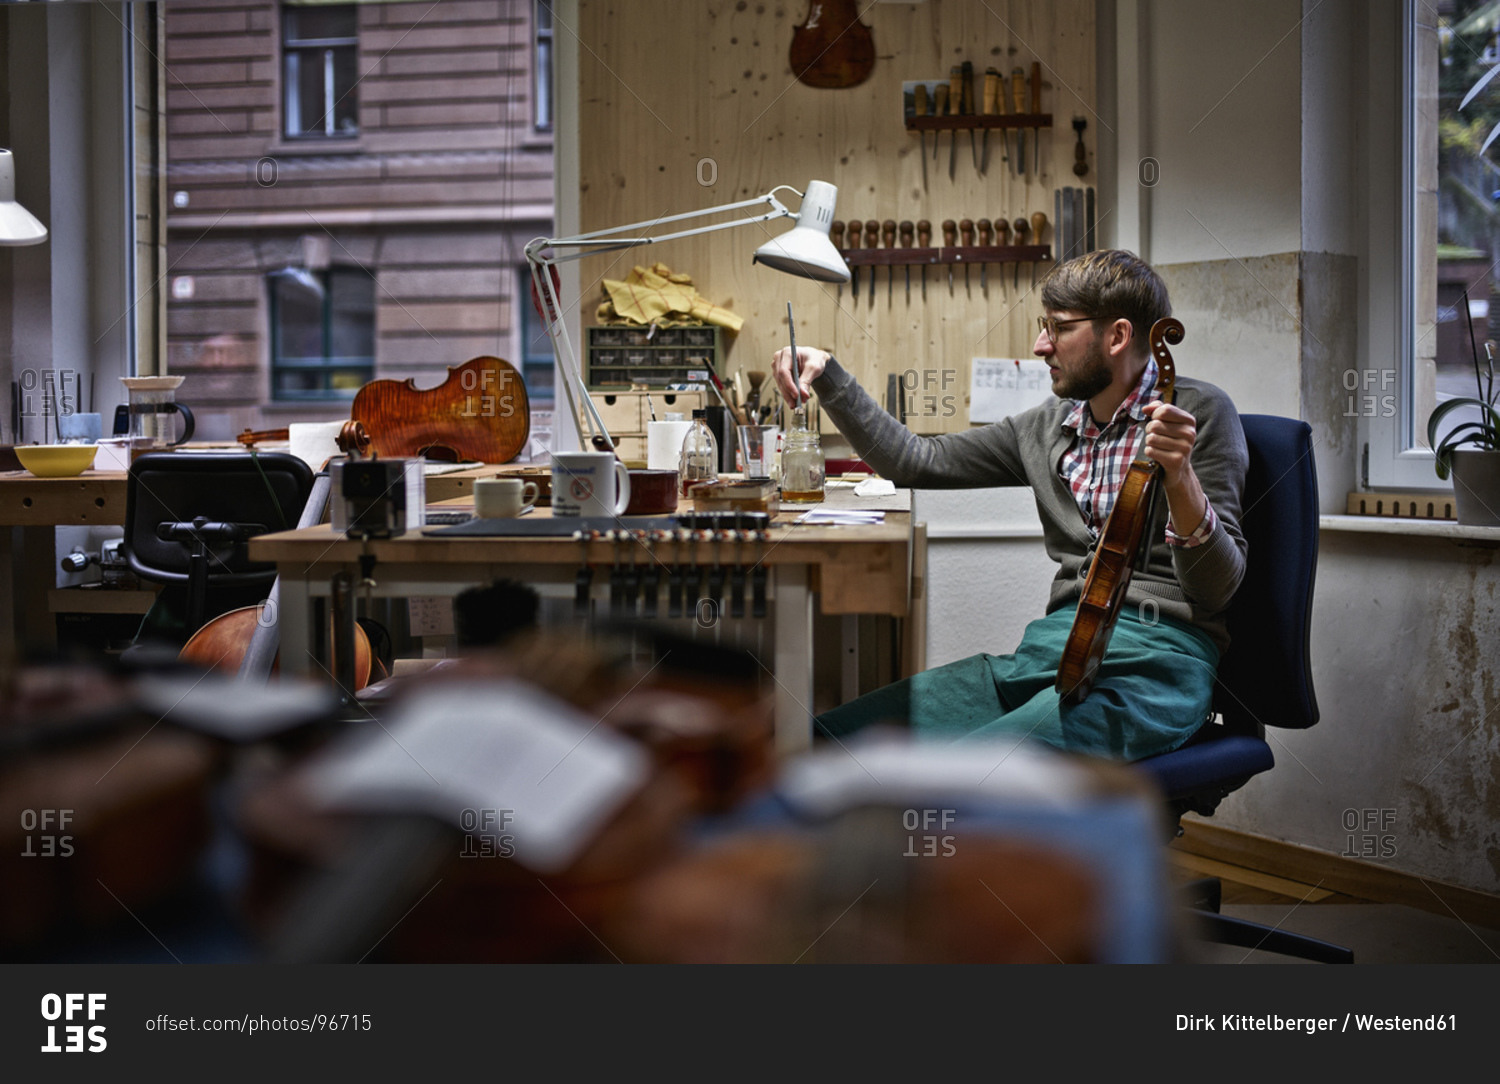 Violin maker in his workshop varnishing repaired violin